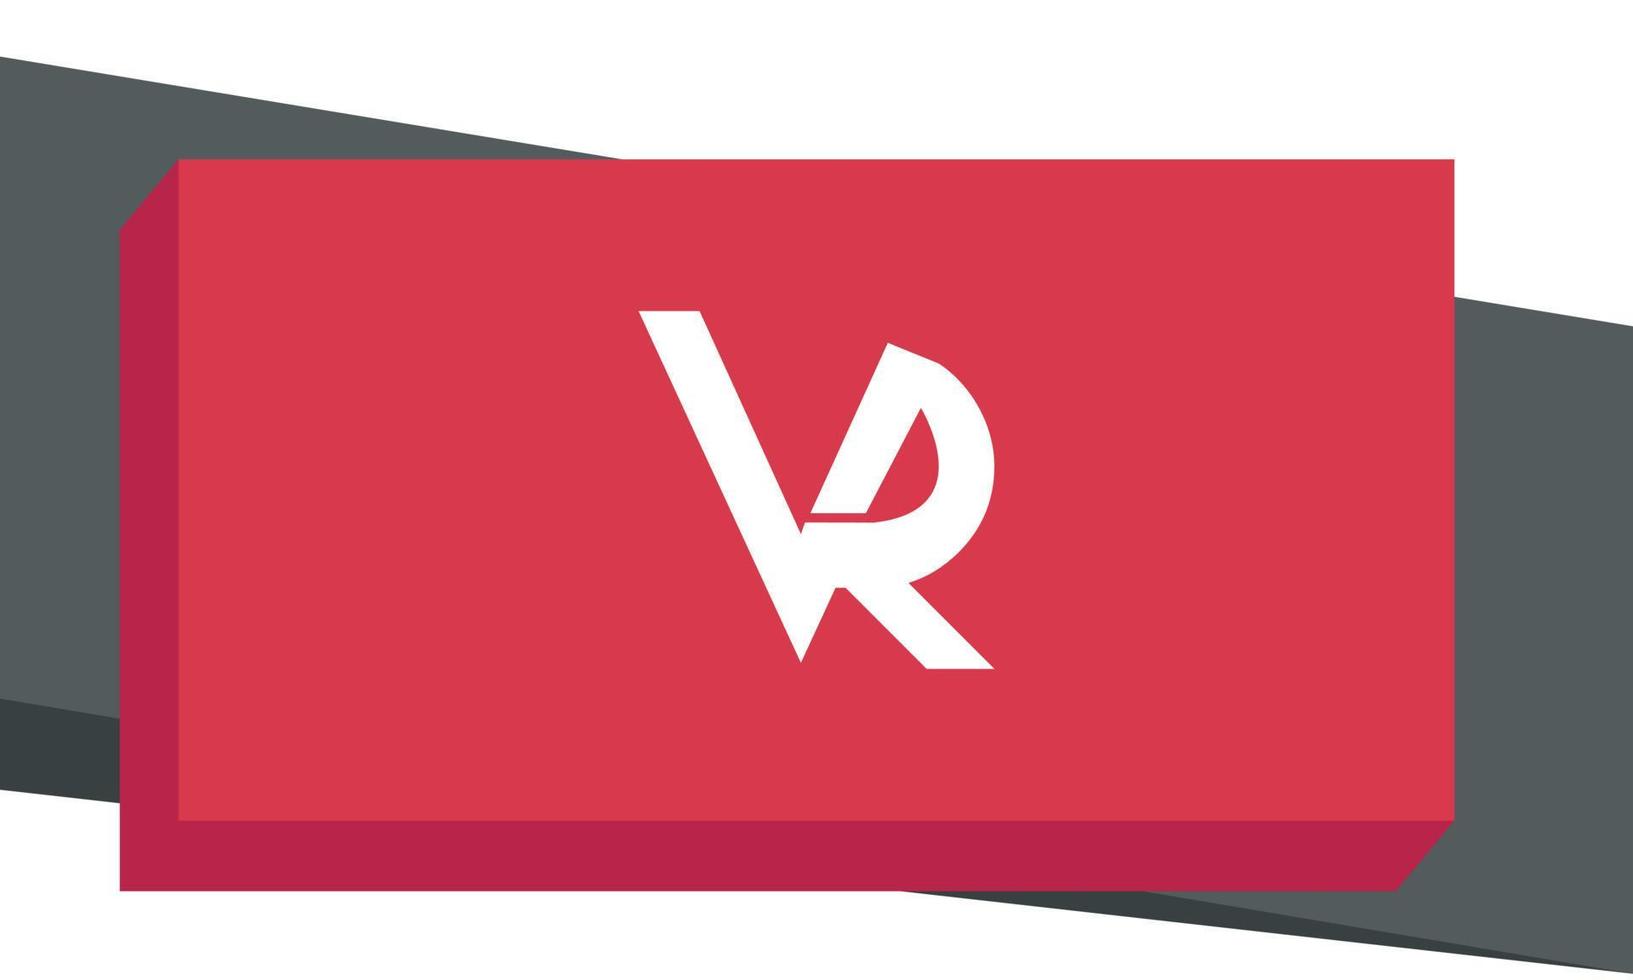 alfabet letters initialen monogram logo vr, rv, v en r vector